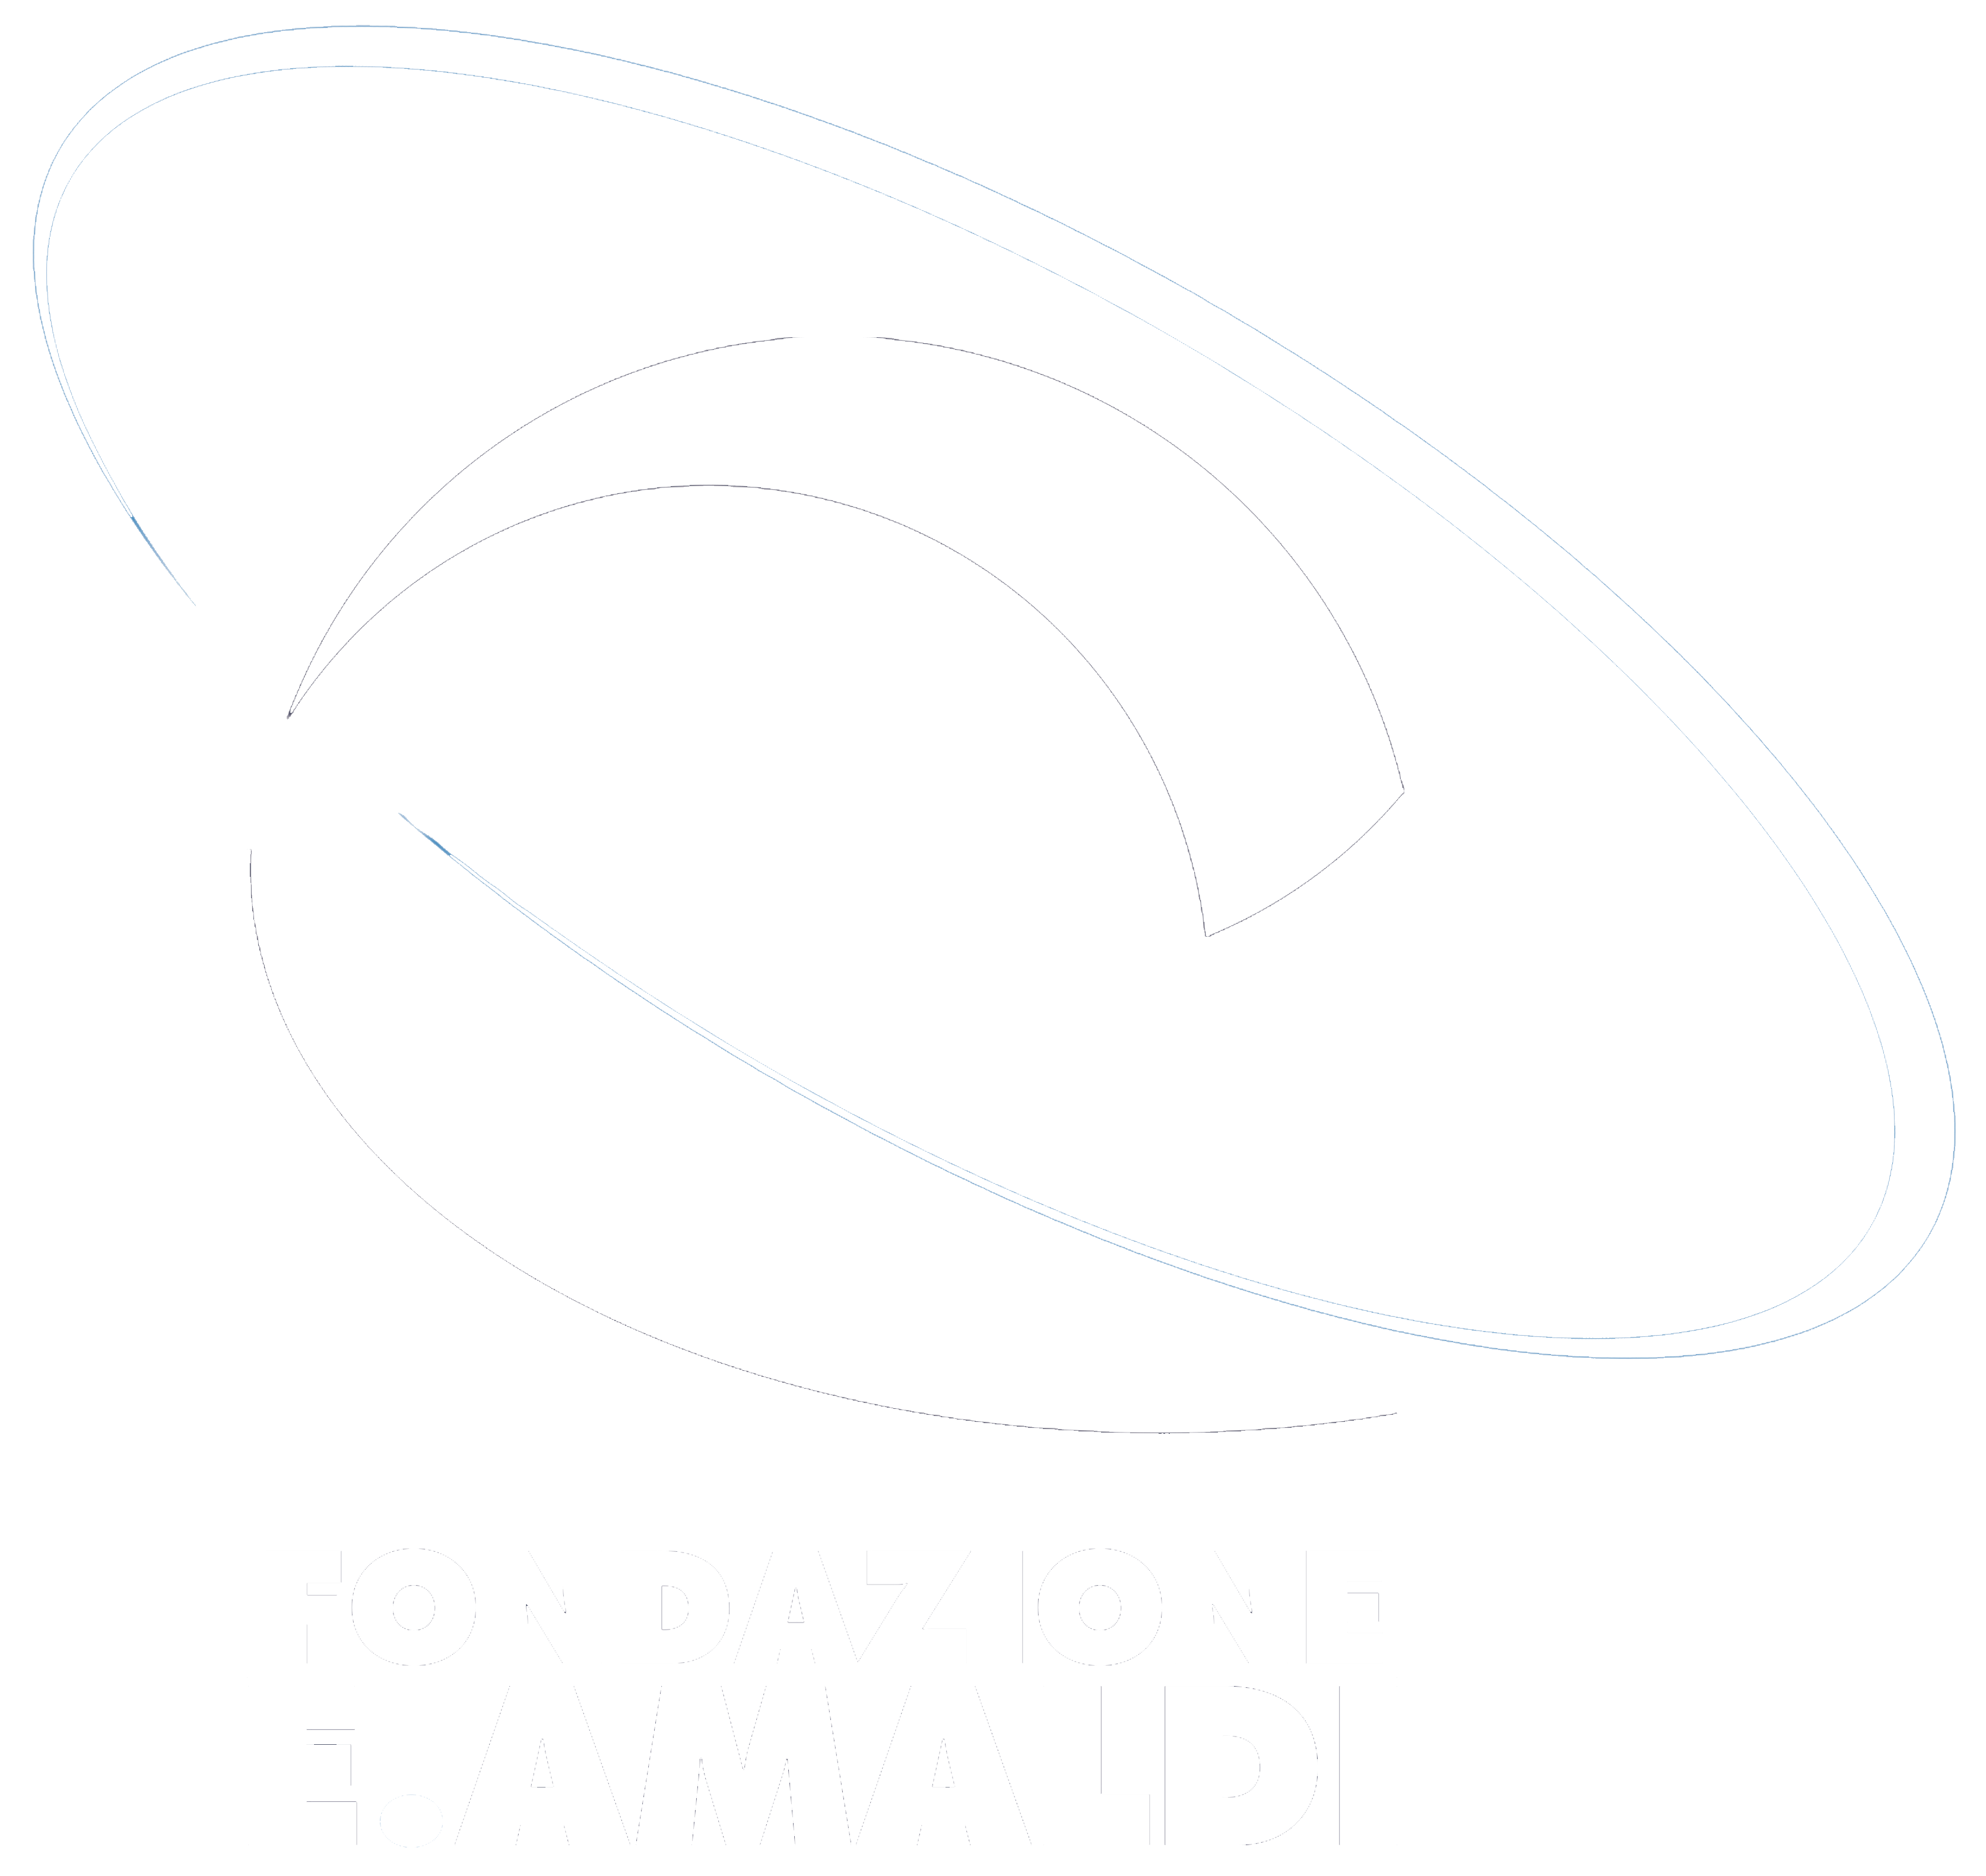 Amaldi Foundation